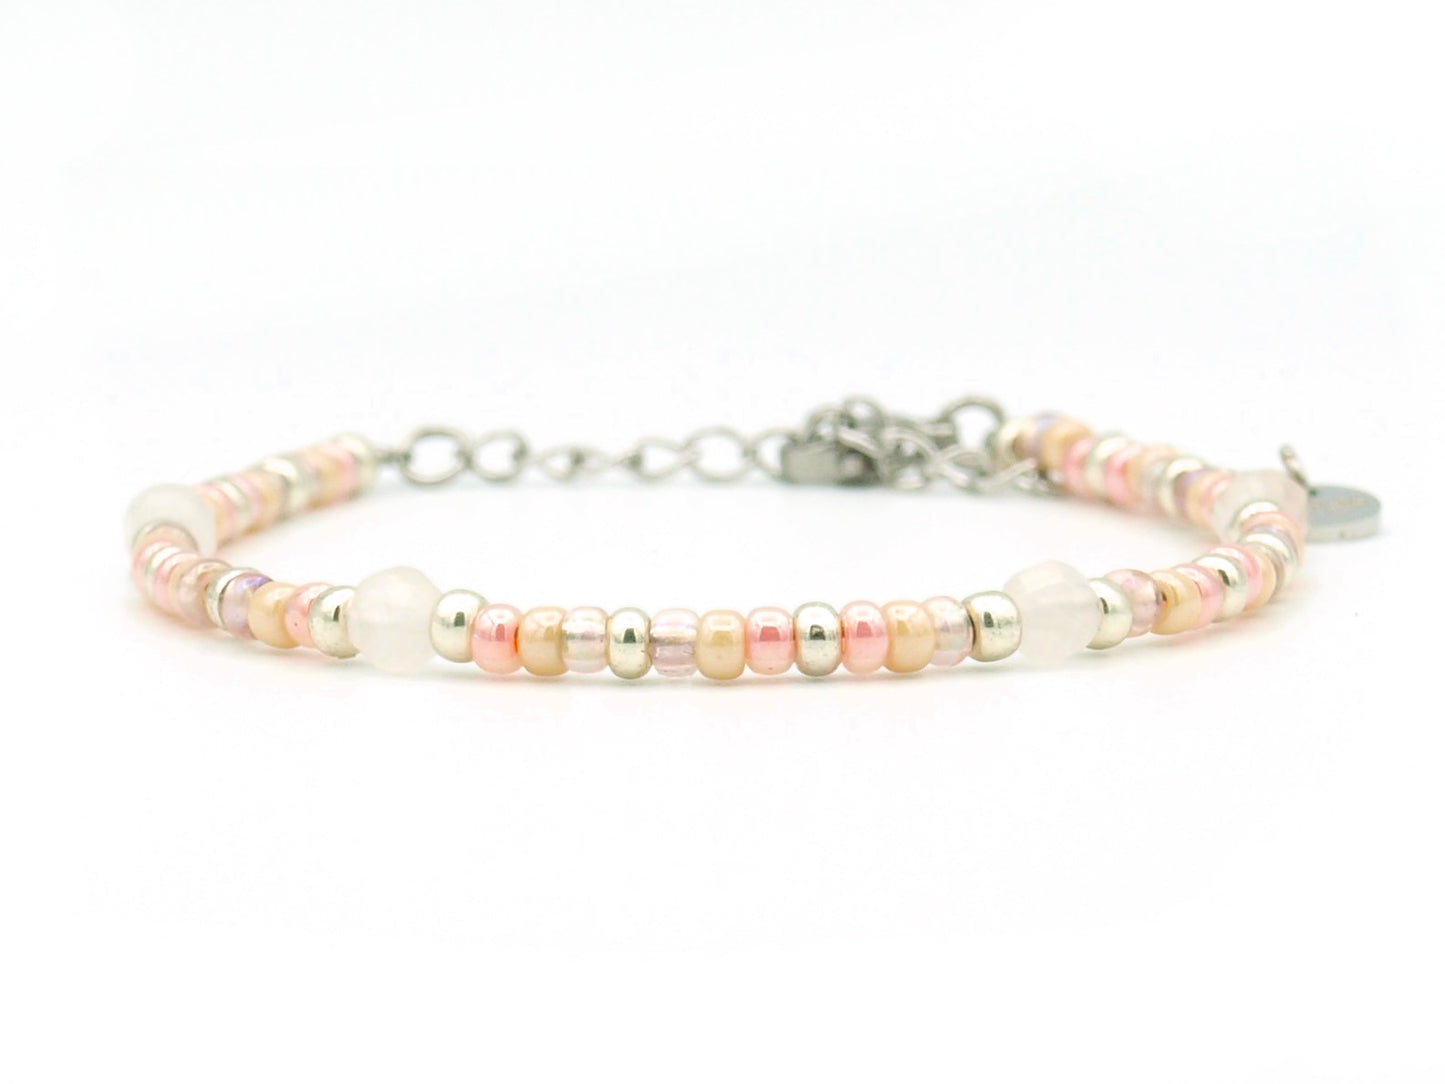 Bracelet Cinta rose quartz, silver or gold stainless steel